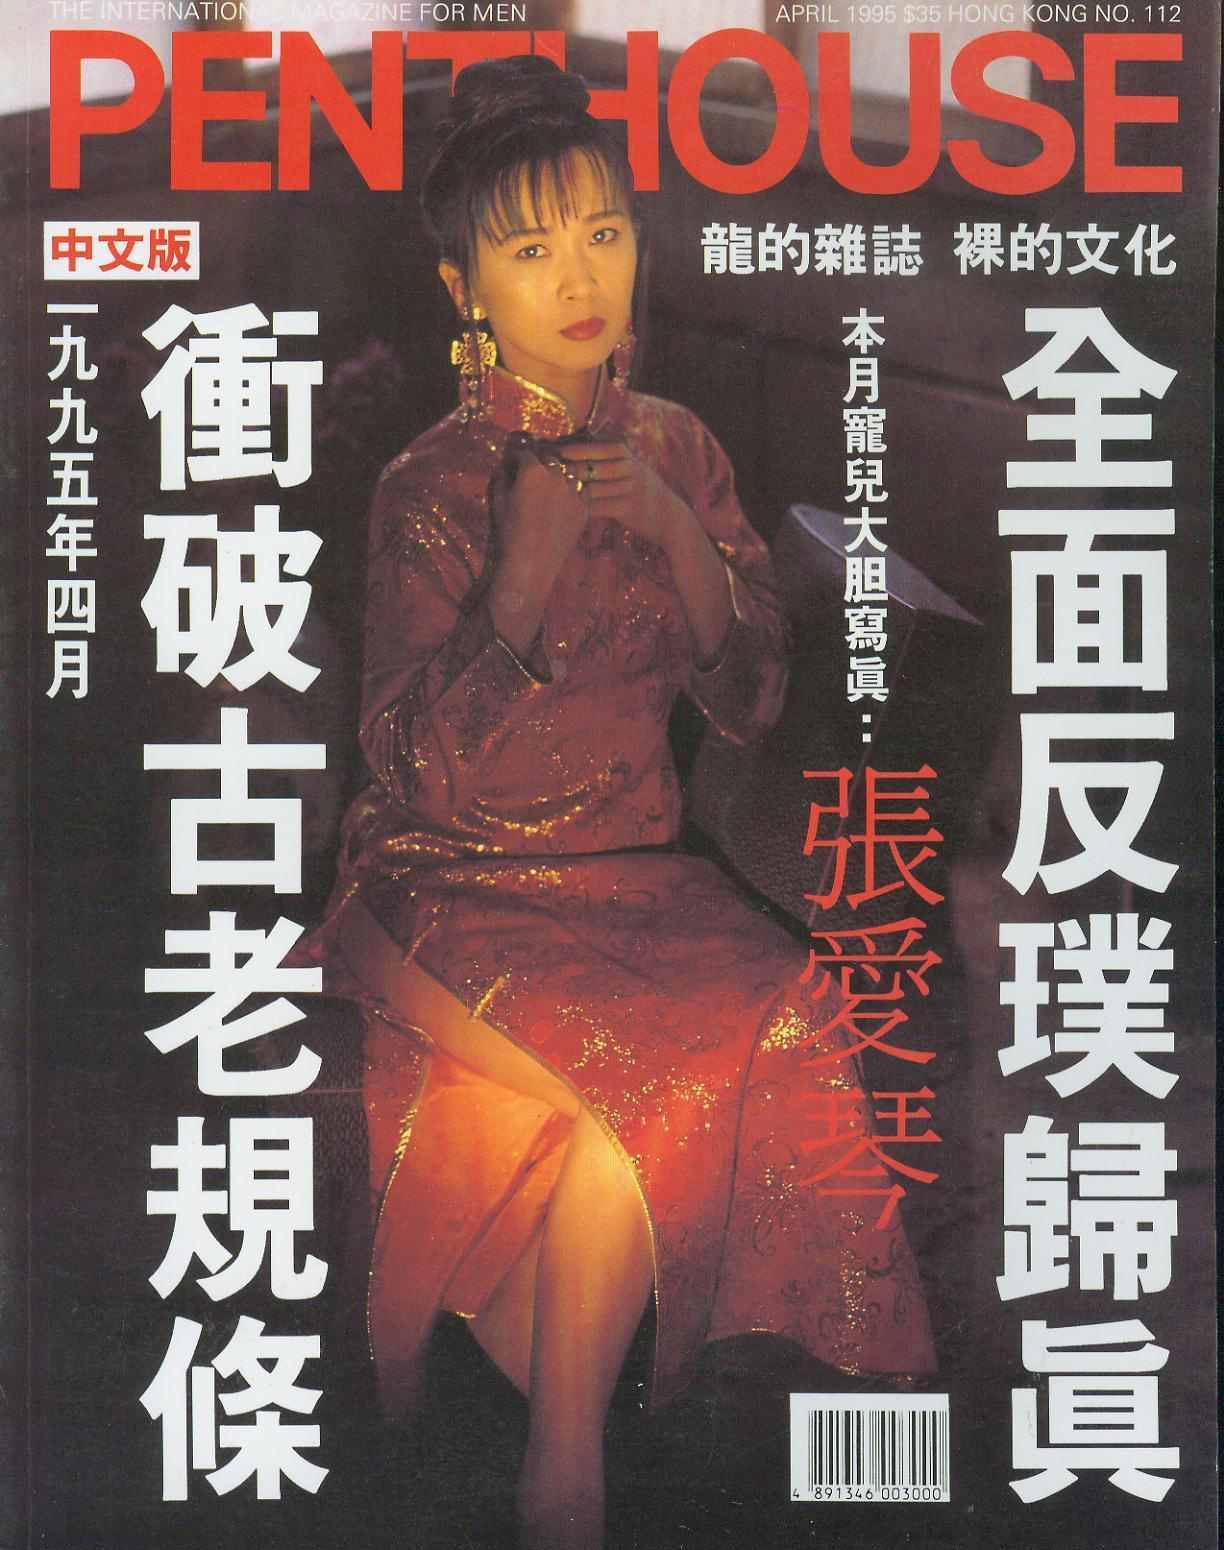 Penthouse (Hong Kong) April 1995 magazine back issue Penthouse (Hong Kong) magizine back copy Penthouse (Hong Kong) April 1995 Magazine Back Issue Published by Penthouse Publishing, Bob Guccione. The International Magazine For Men.